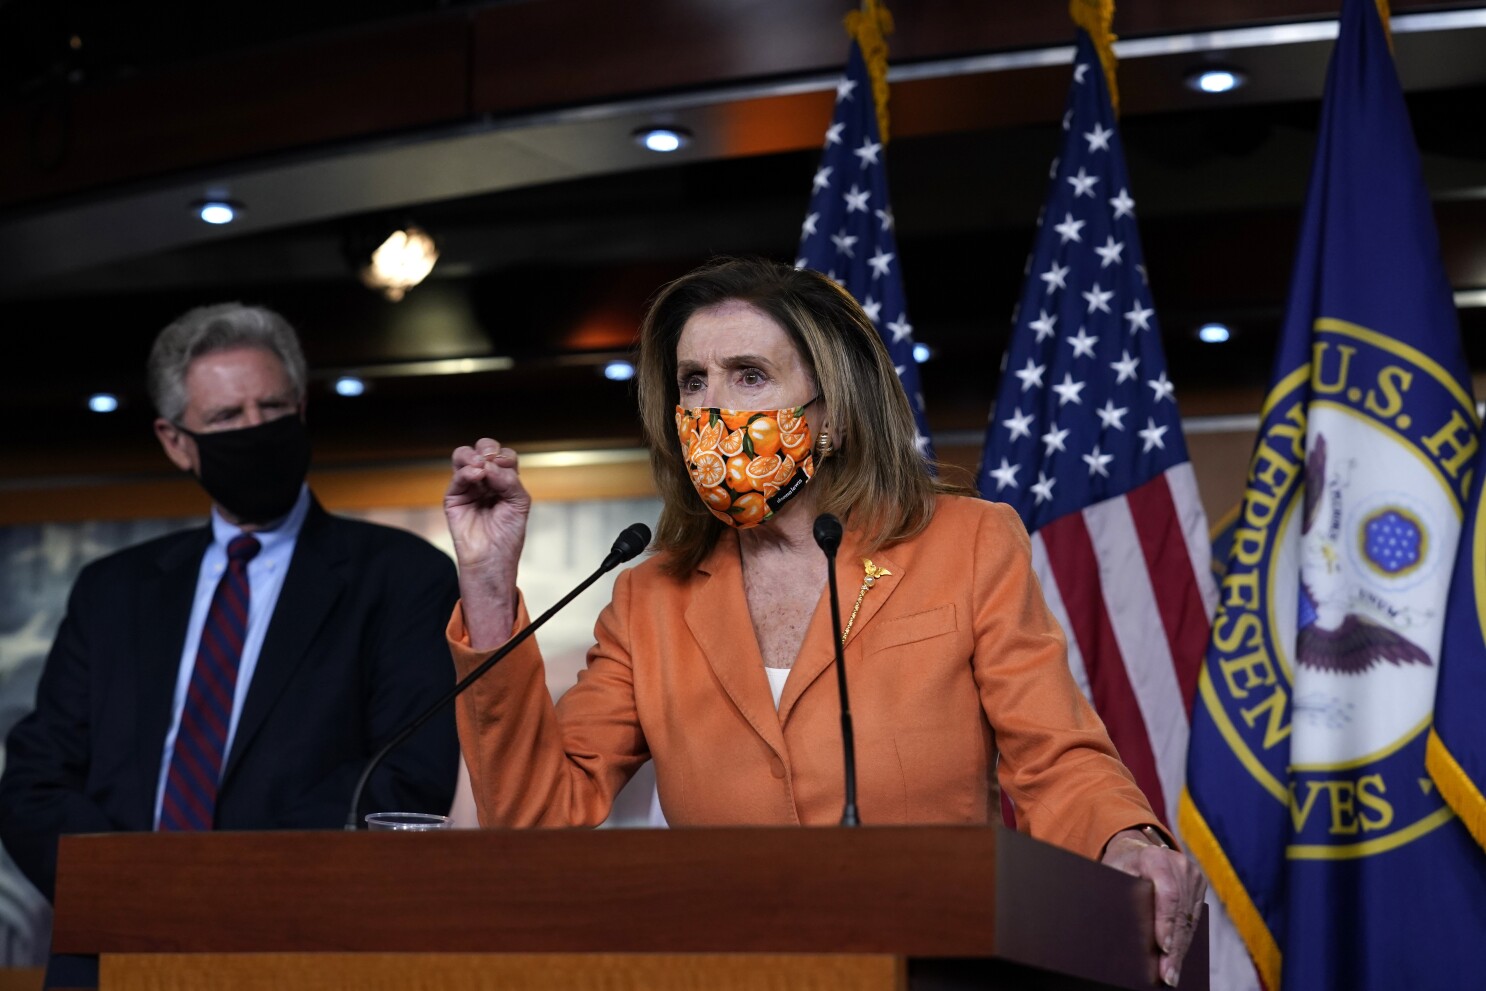 Congresswoman speaking at podium with mask on